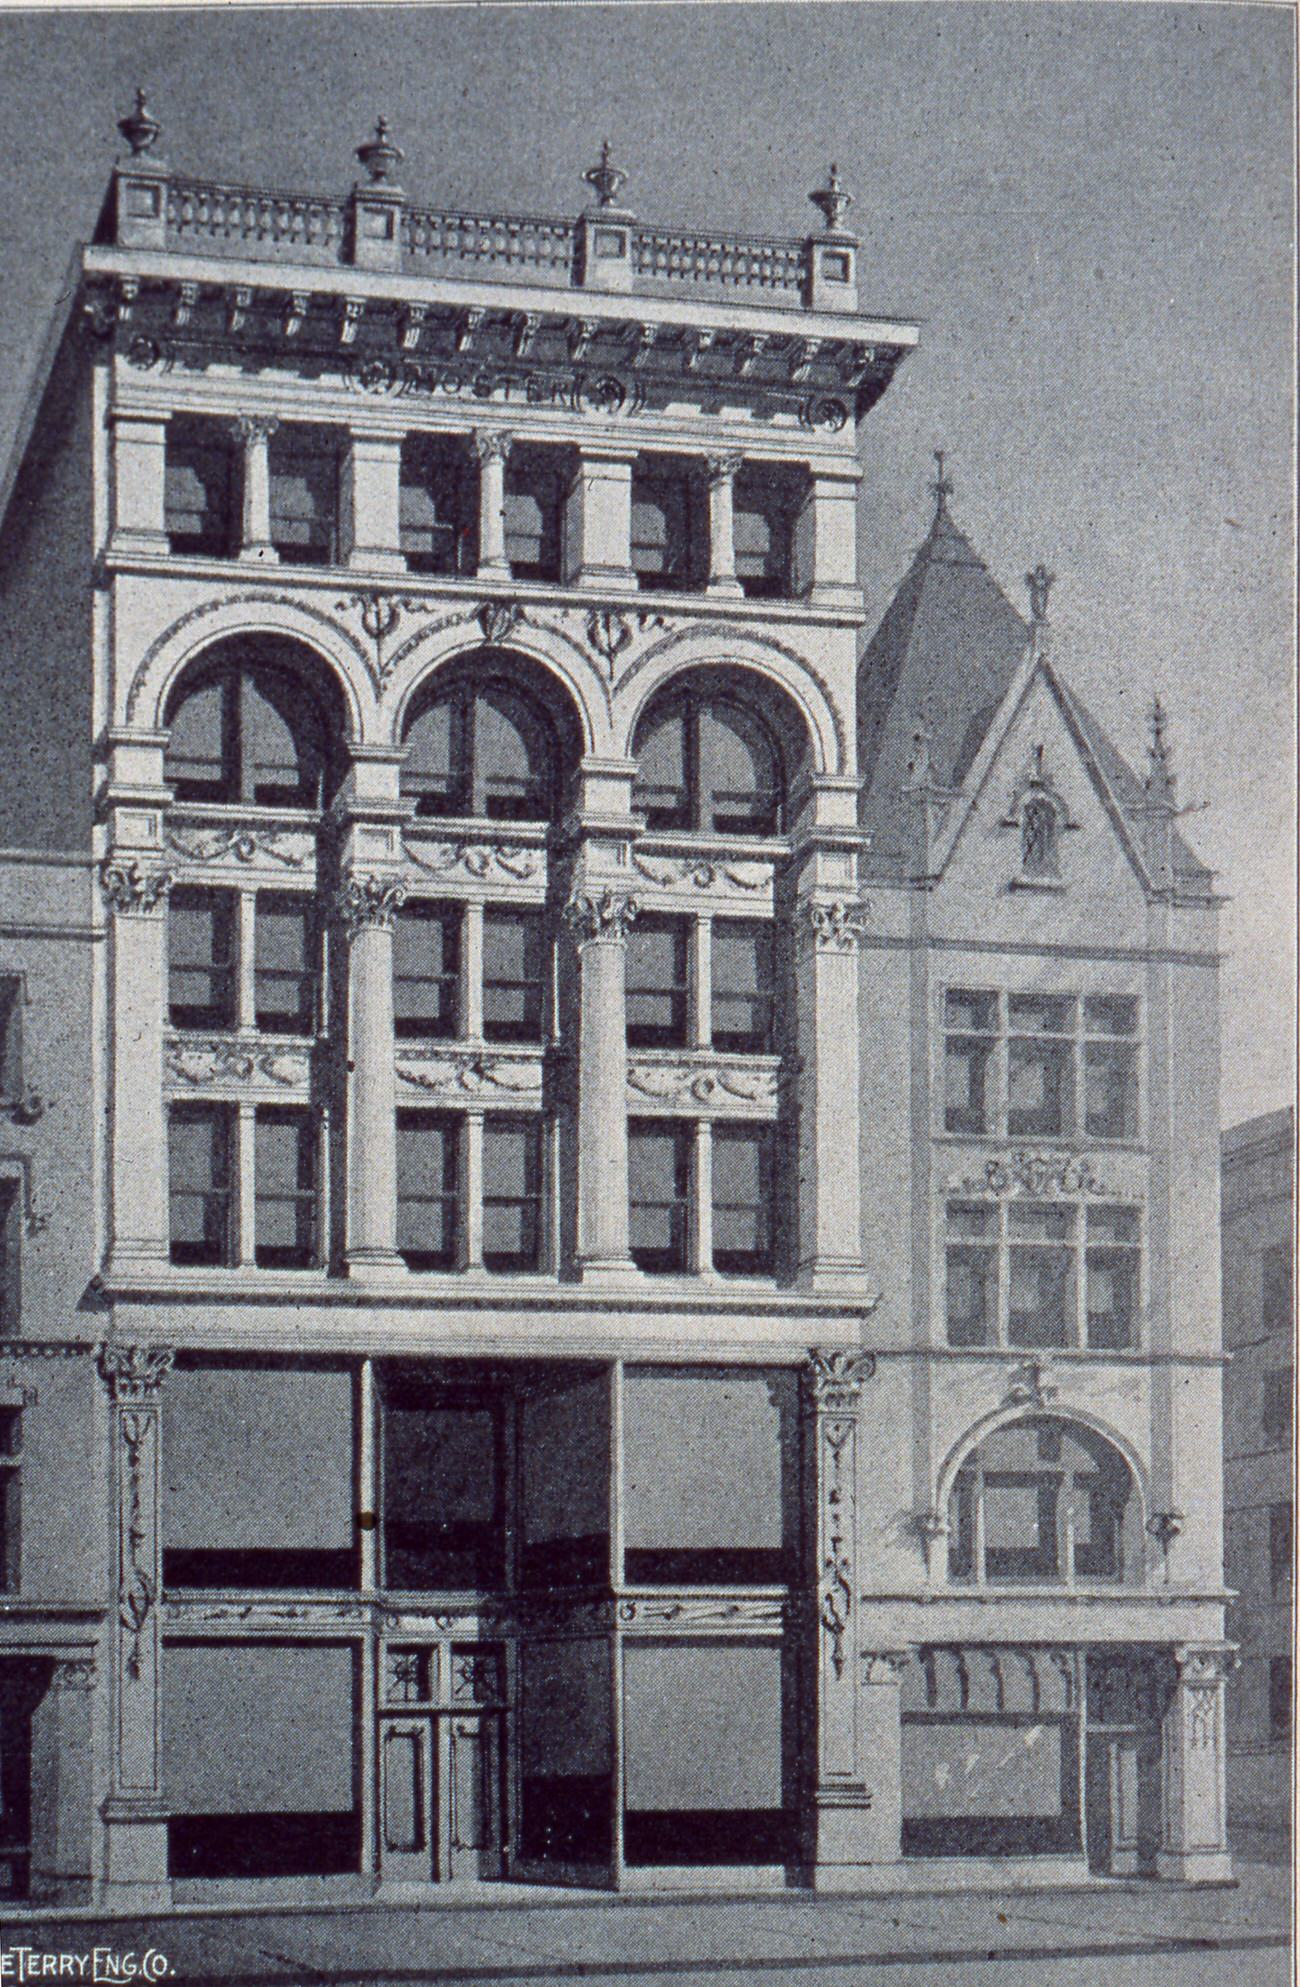 Hoster Building illustration, 1898.